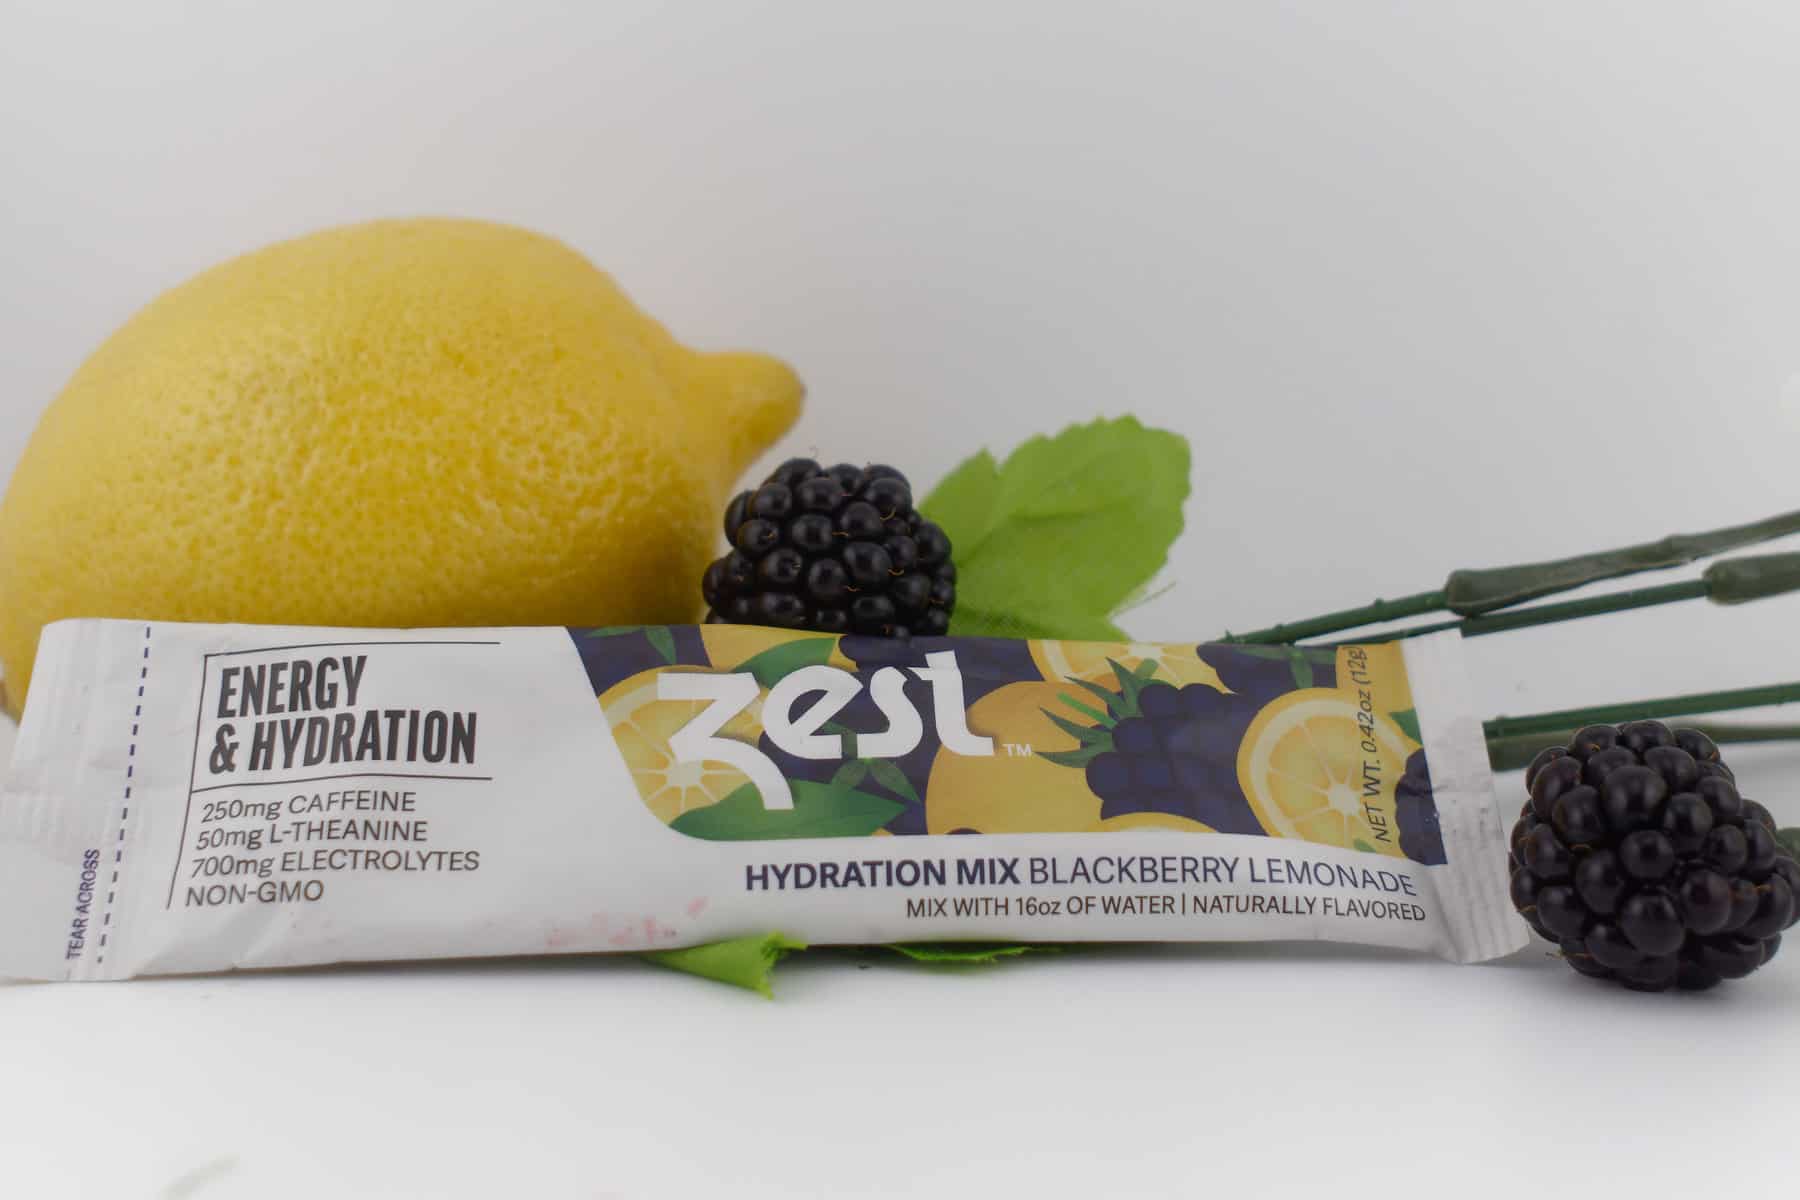 Zest Blackberry Lemonade Hydration Mix Review